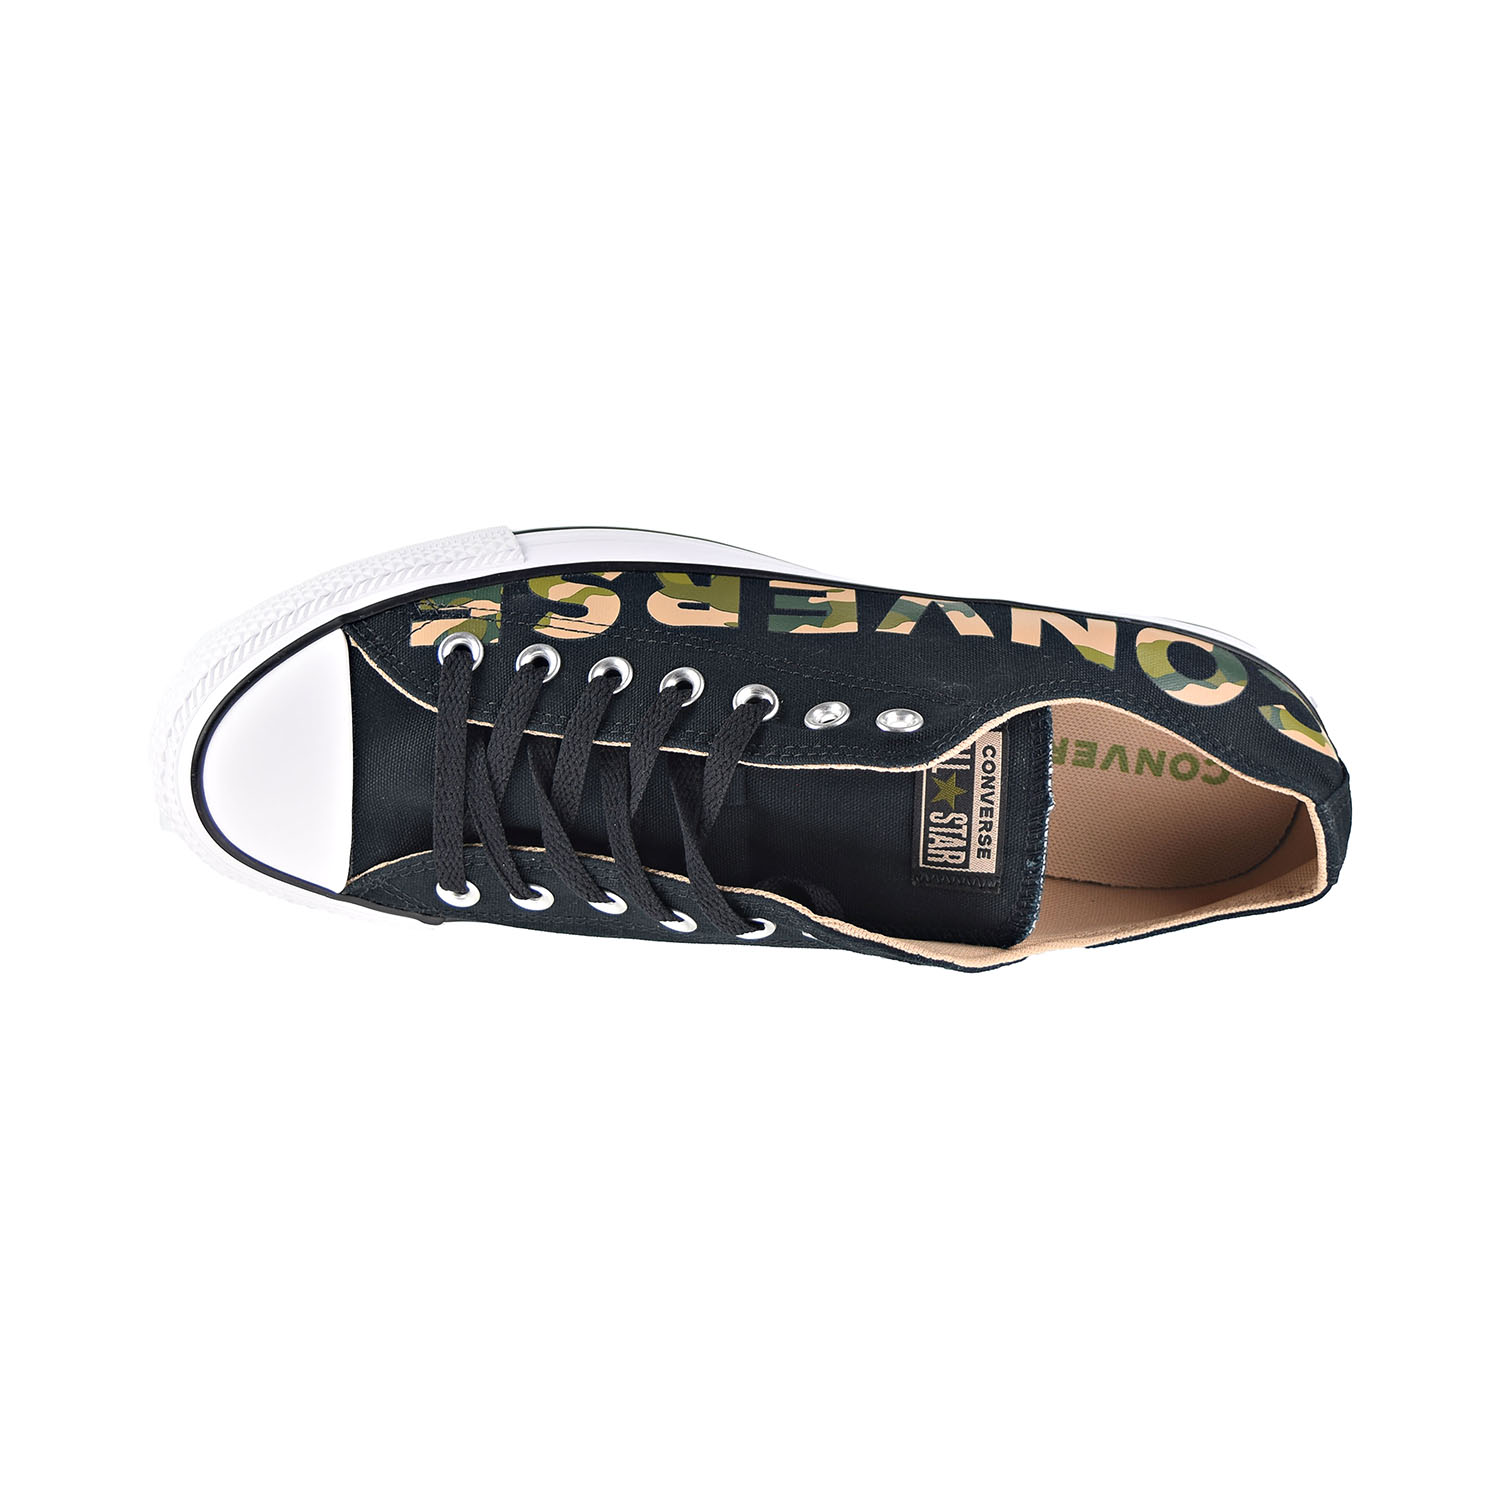 Converse Chuck Taylor All Star Ox "Camo Print" Men's Shoes Black-Multi-White 166234f - image 5 of 6